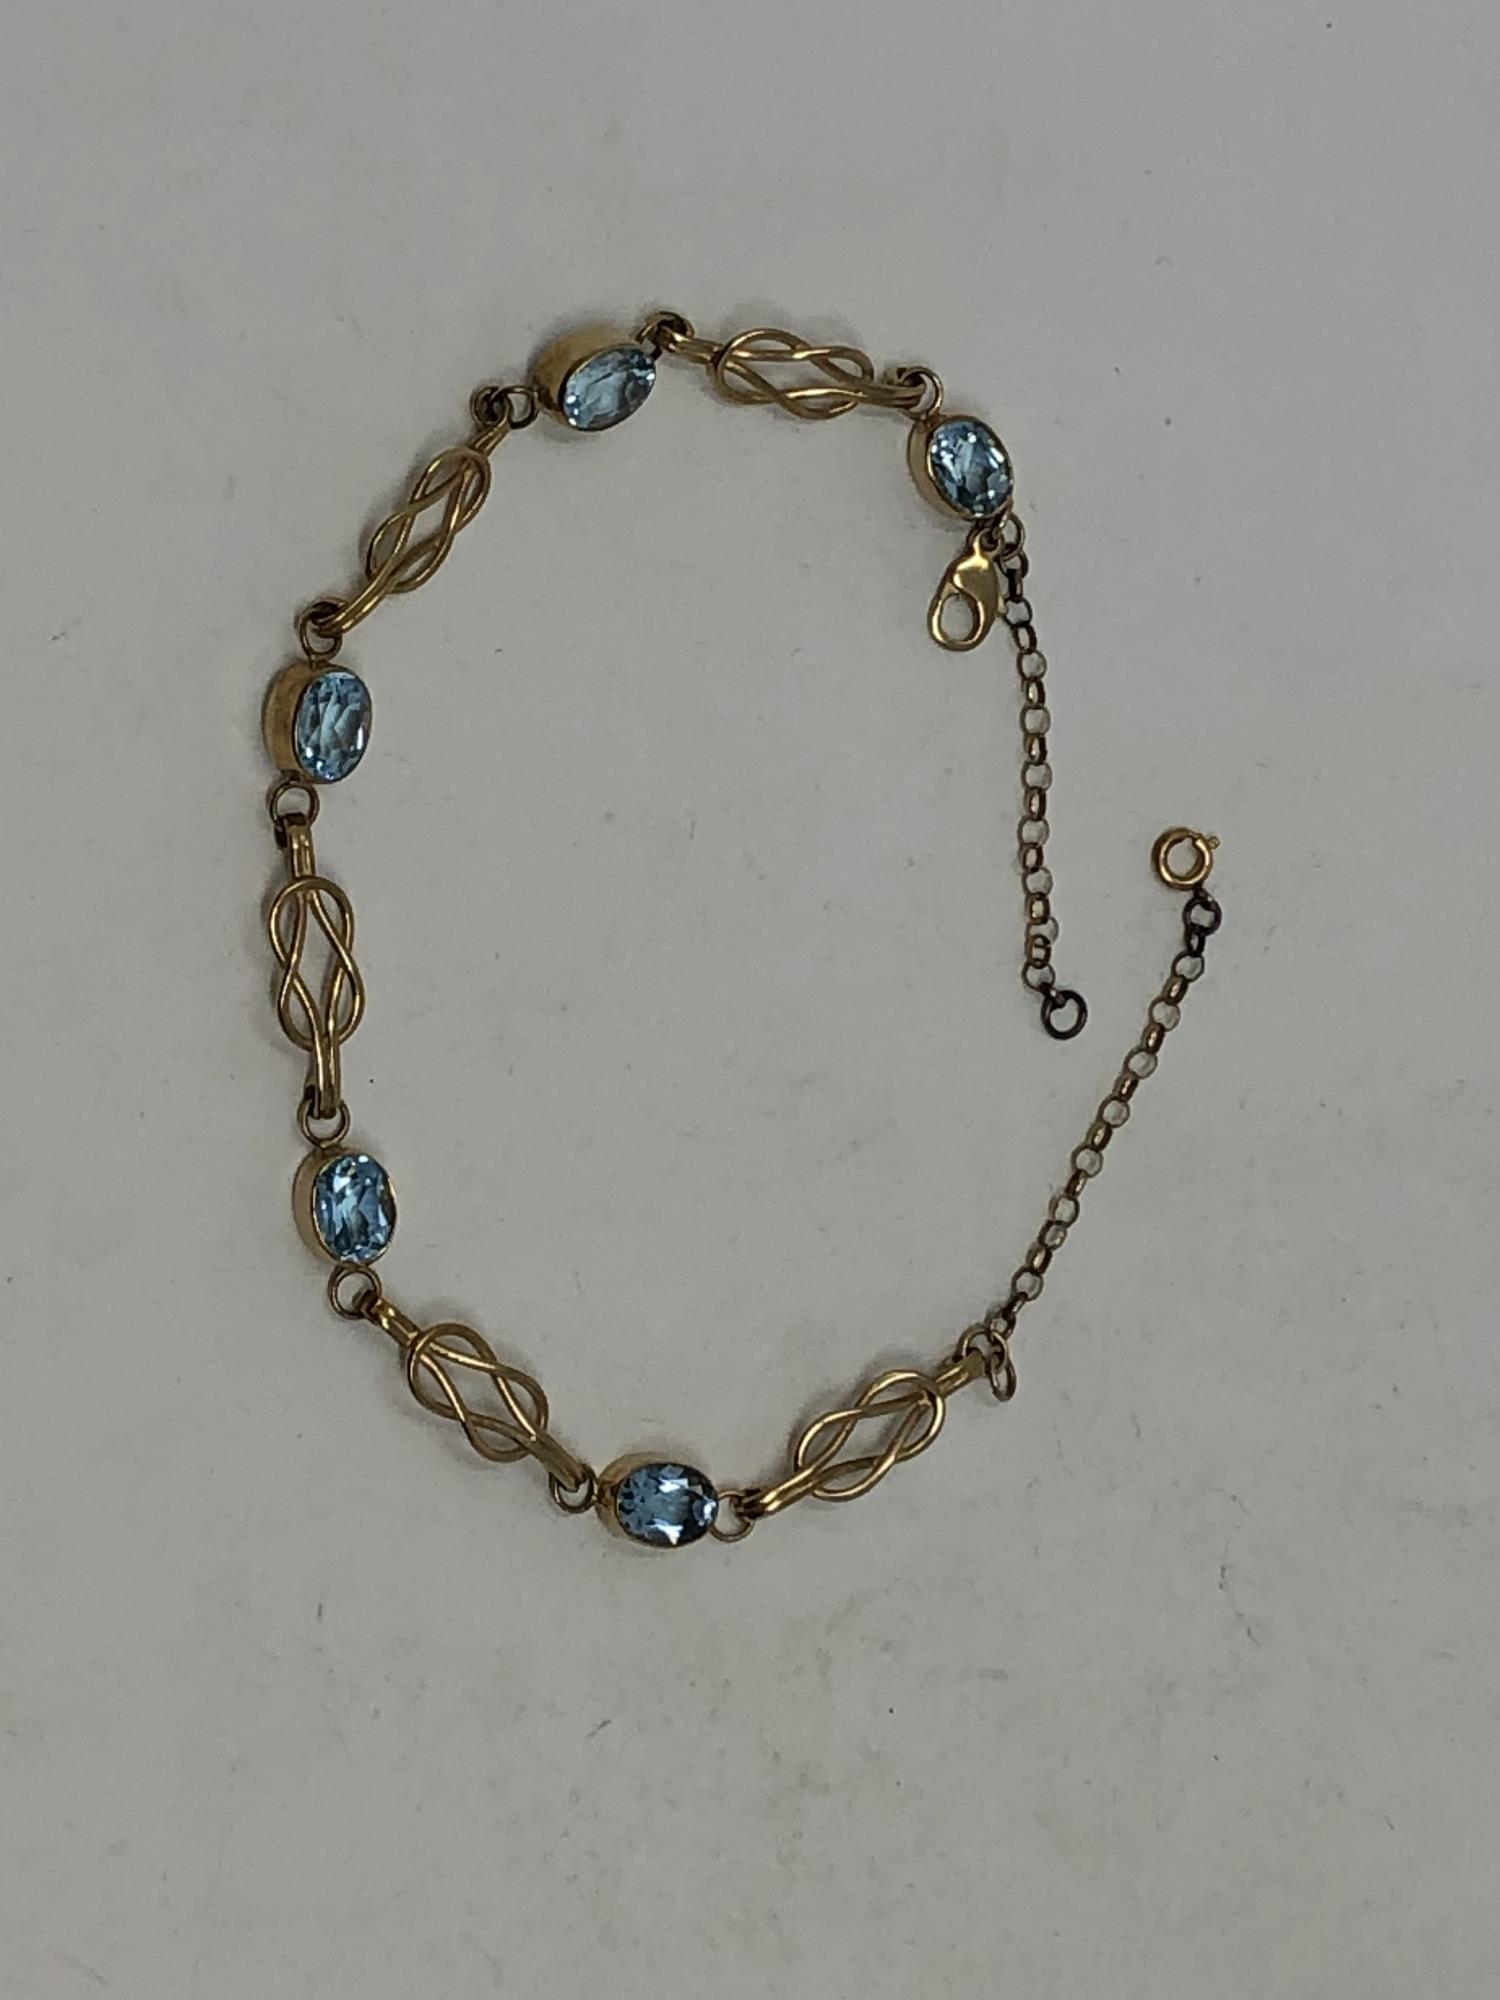 A gold and aquamarine bracelet